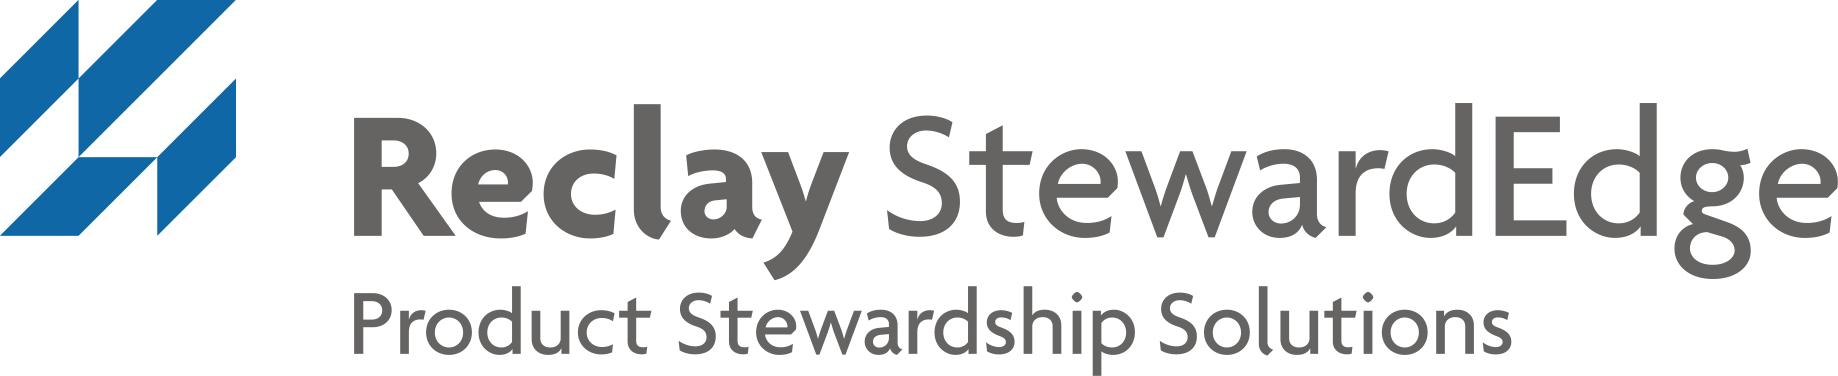 Reclay StewardEdge logo